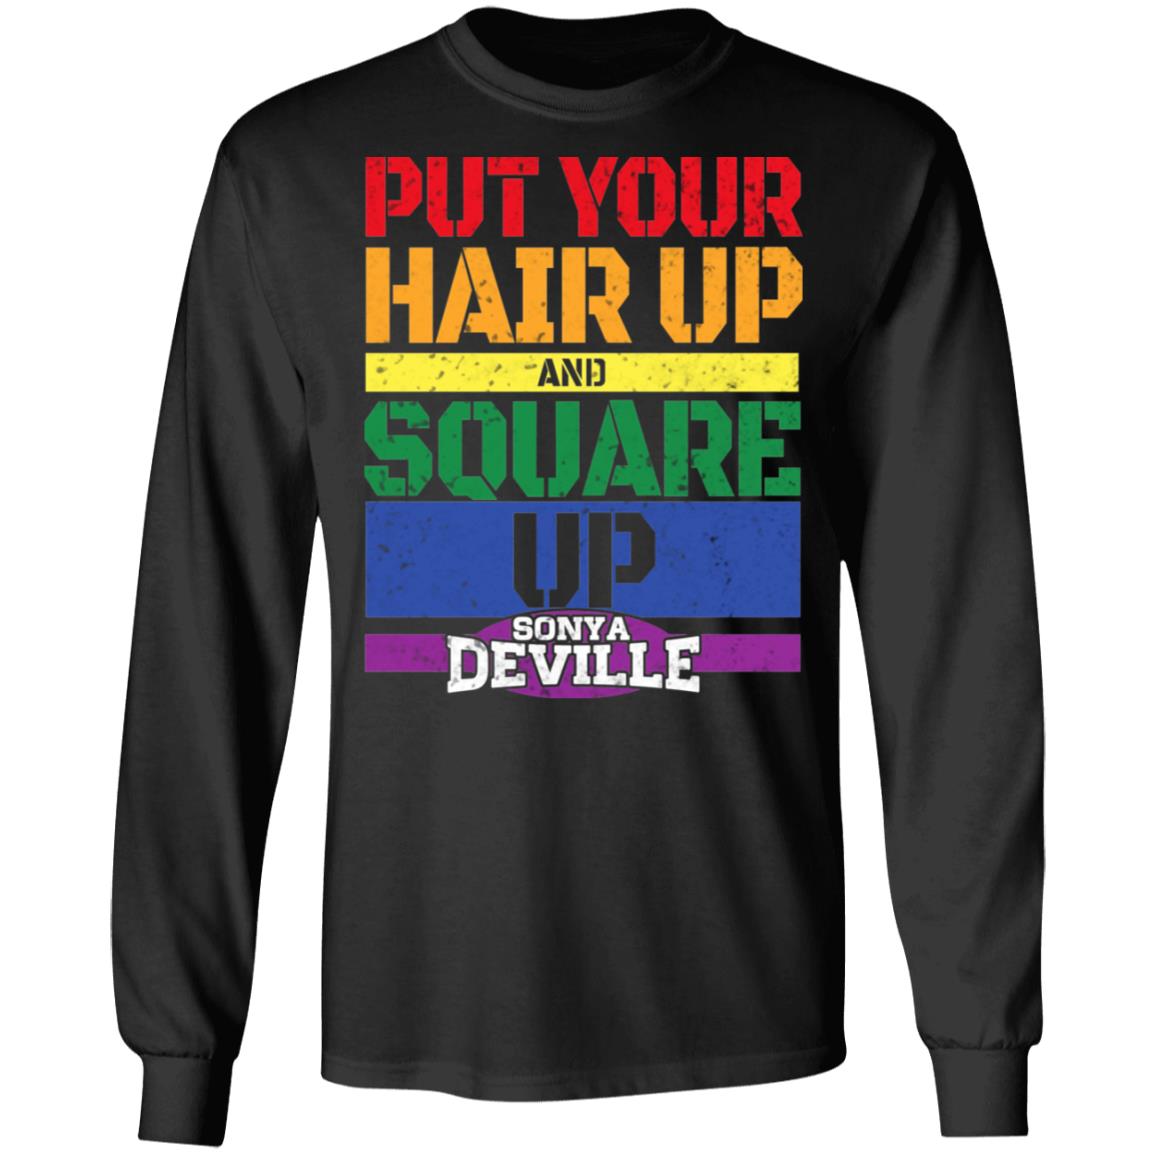 Sonya Deville "Square Up" Authentic T-Shirt 